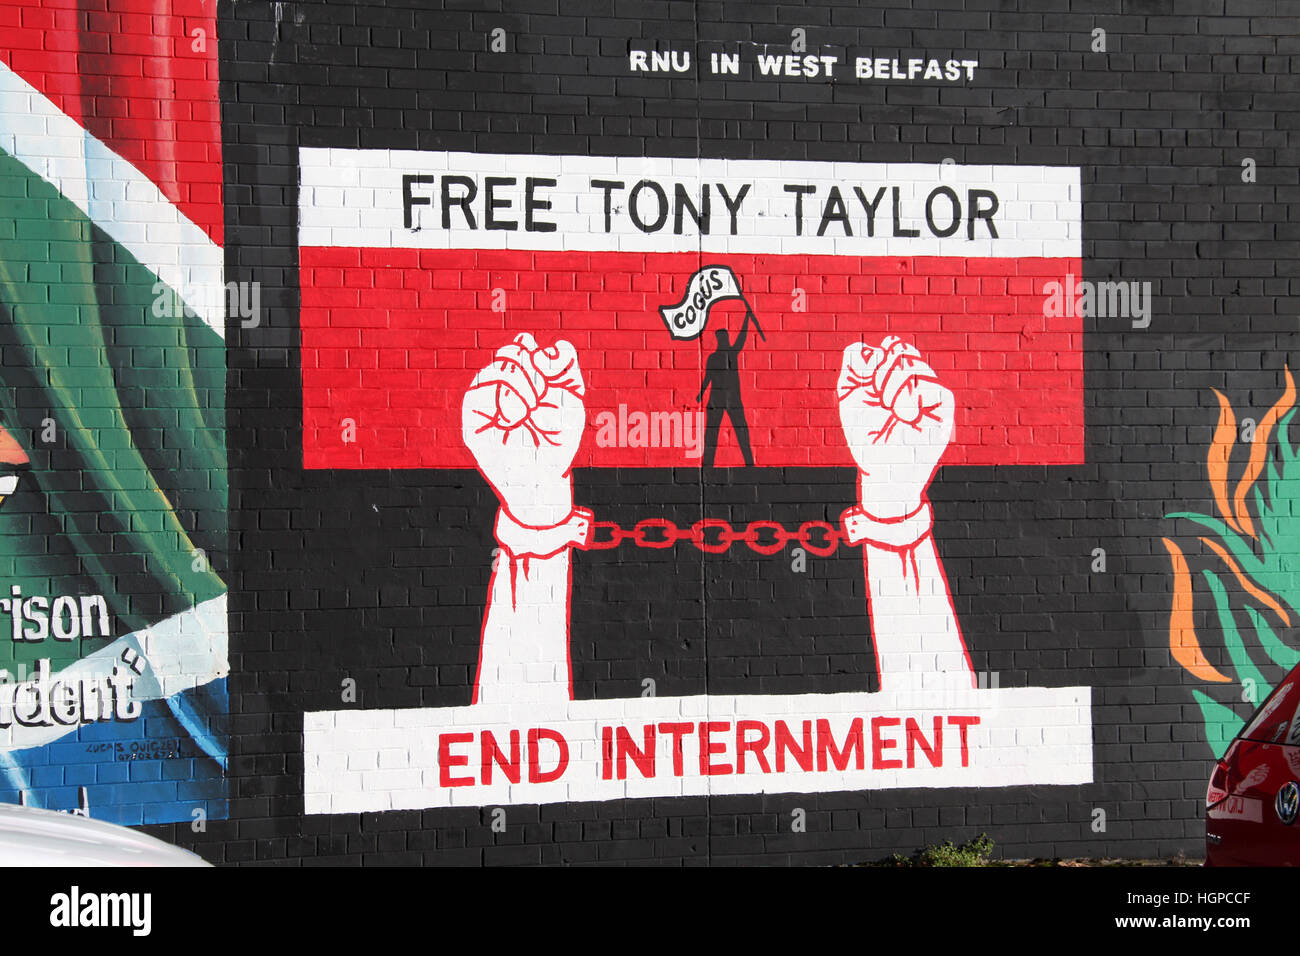 Articles de Tony Taylor murale sur la Falls Road à Belfast Banque D'Images